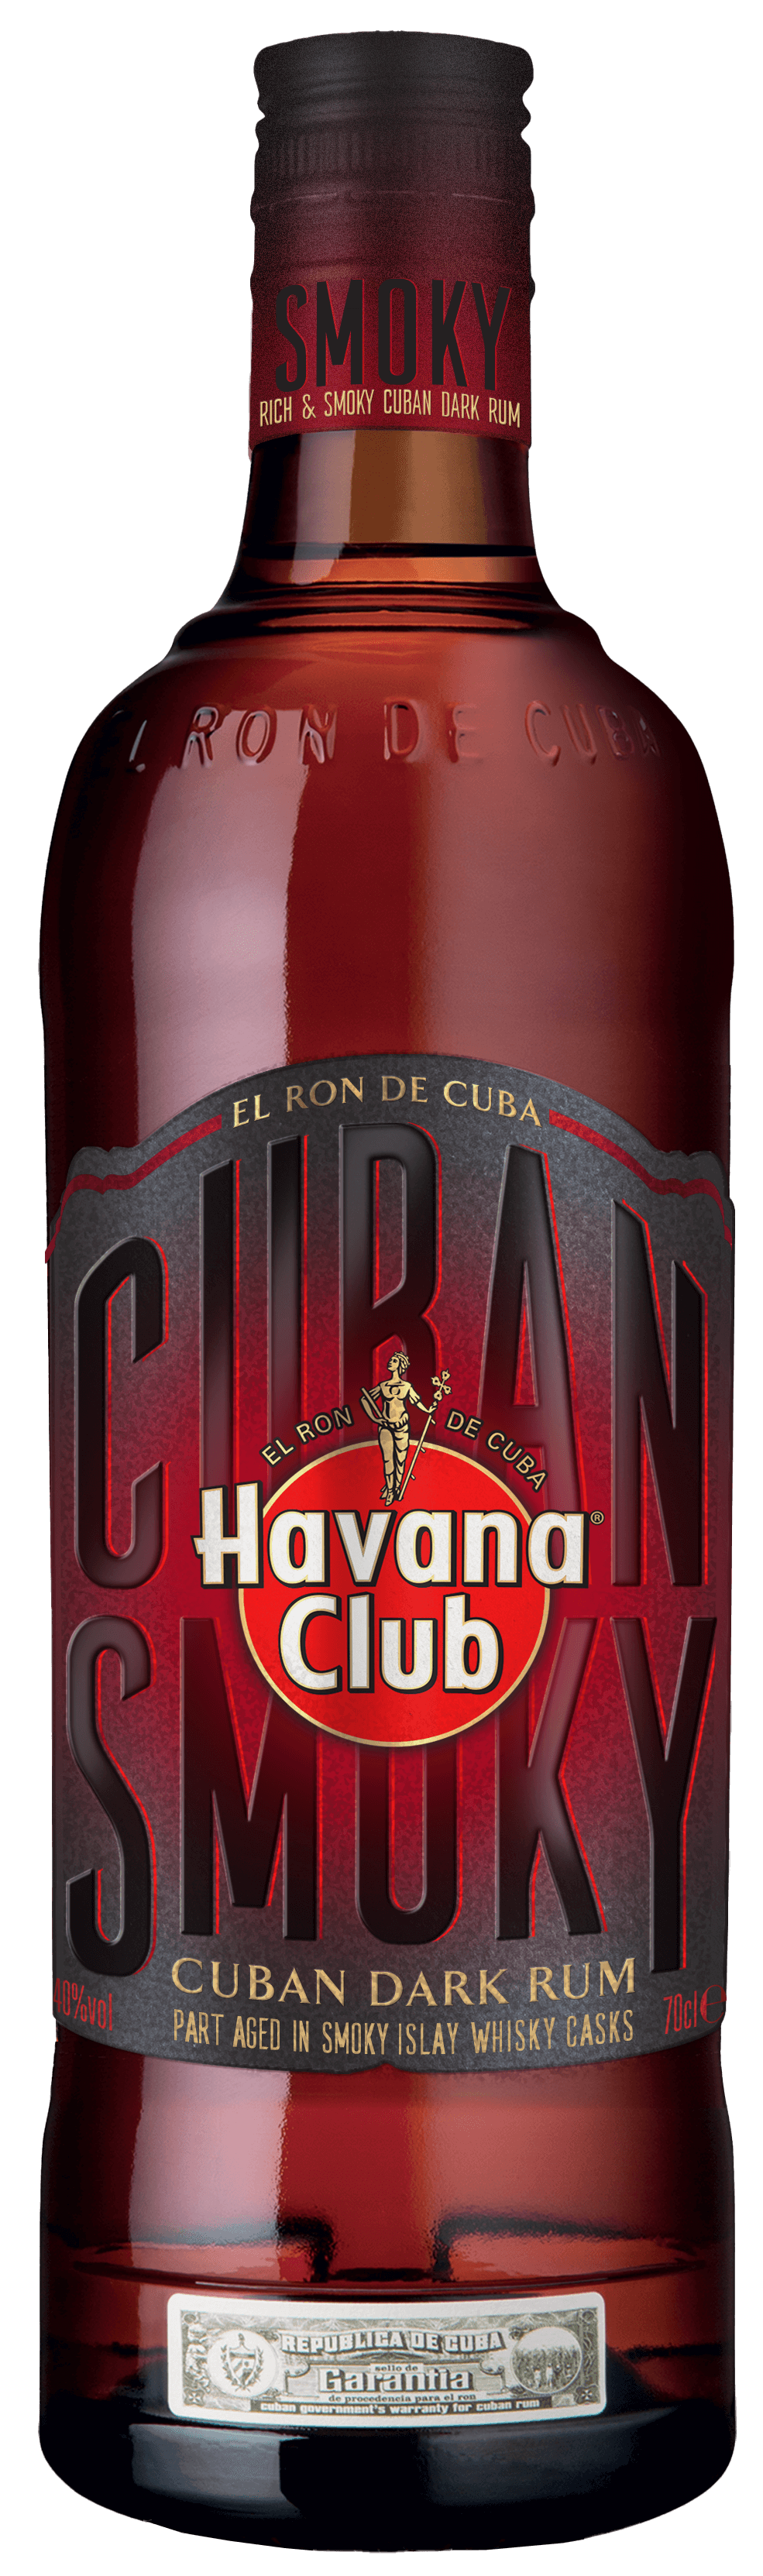 Rum aged in whisky barrels Havana Club Smoky | Havana Club